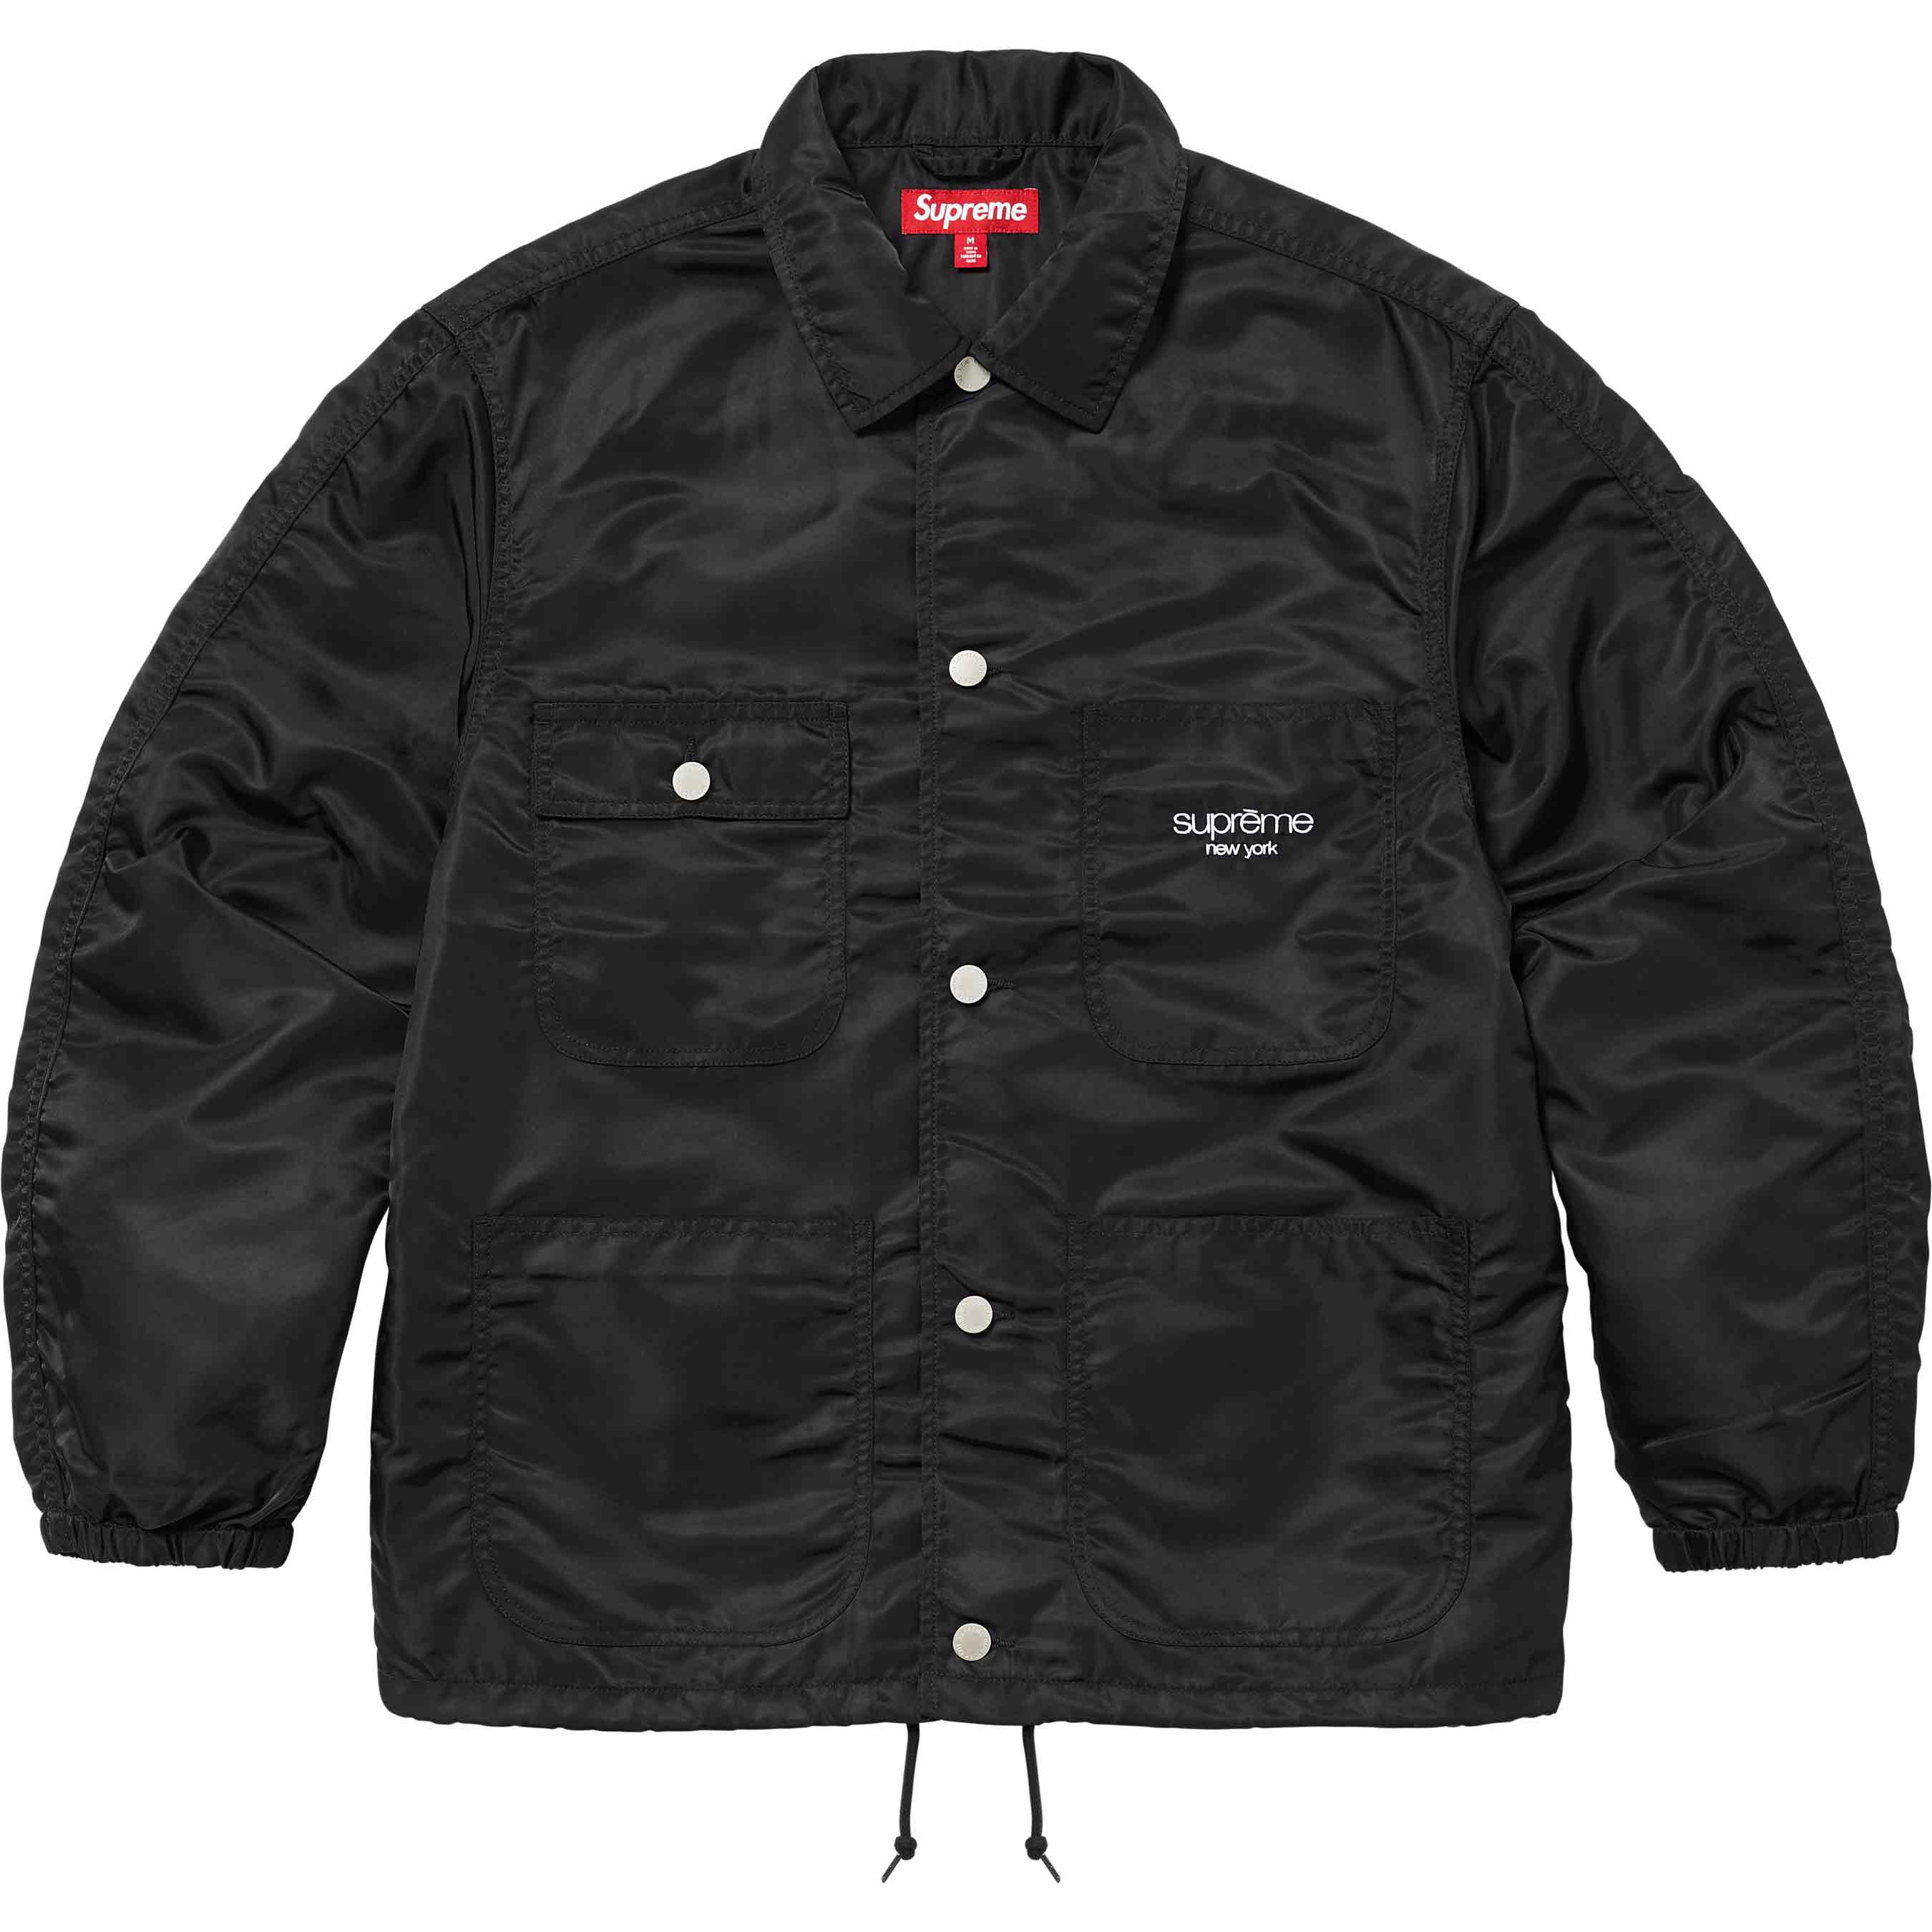 Пальто Supreme Nylon Chore, черный пальто qiongyu повседневное 46 размер